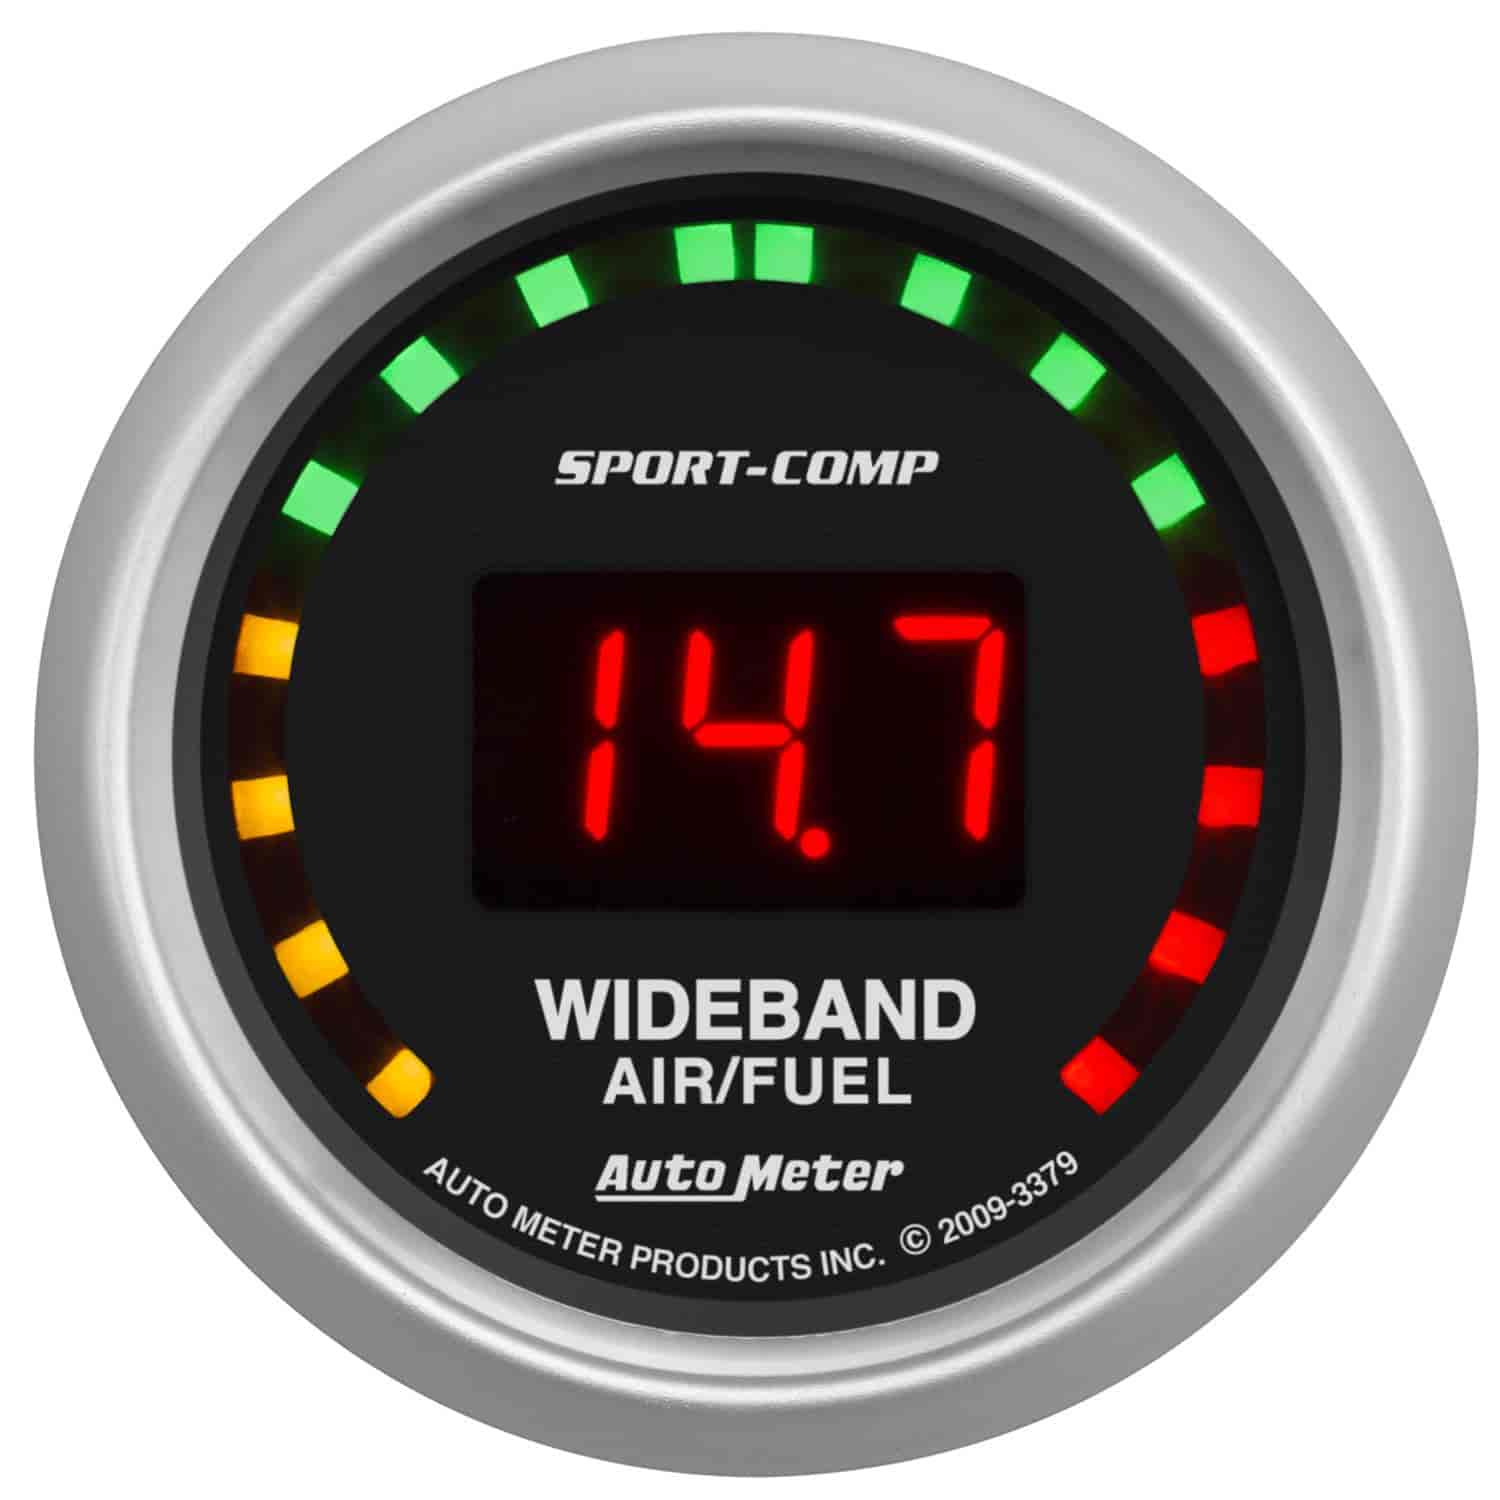 Sport-Comp Wideband Air/Fuel Gauge 2-1/16" Digital